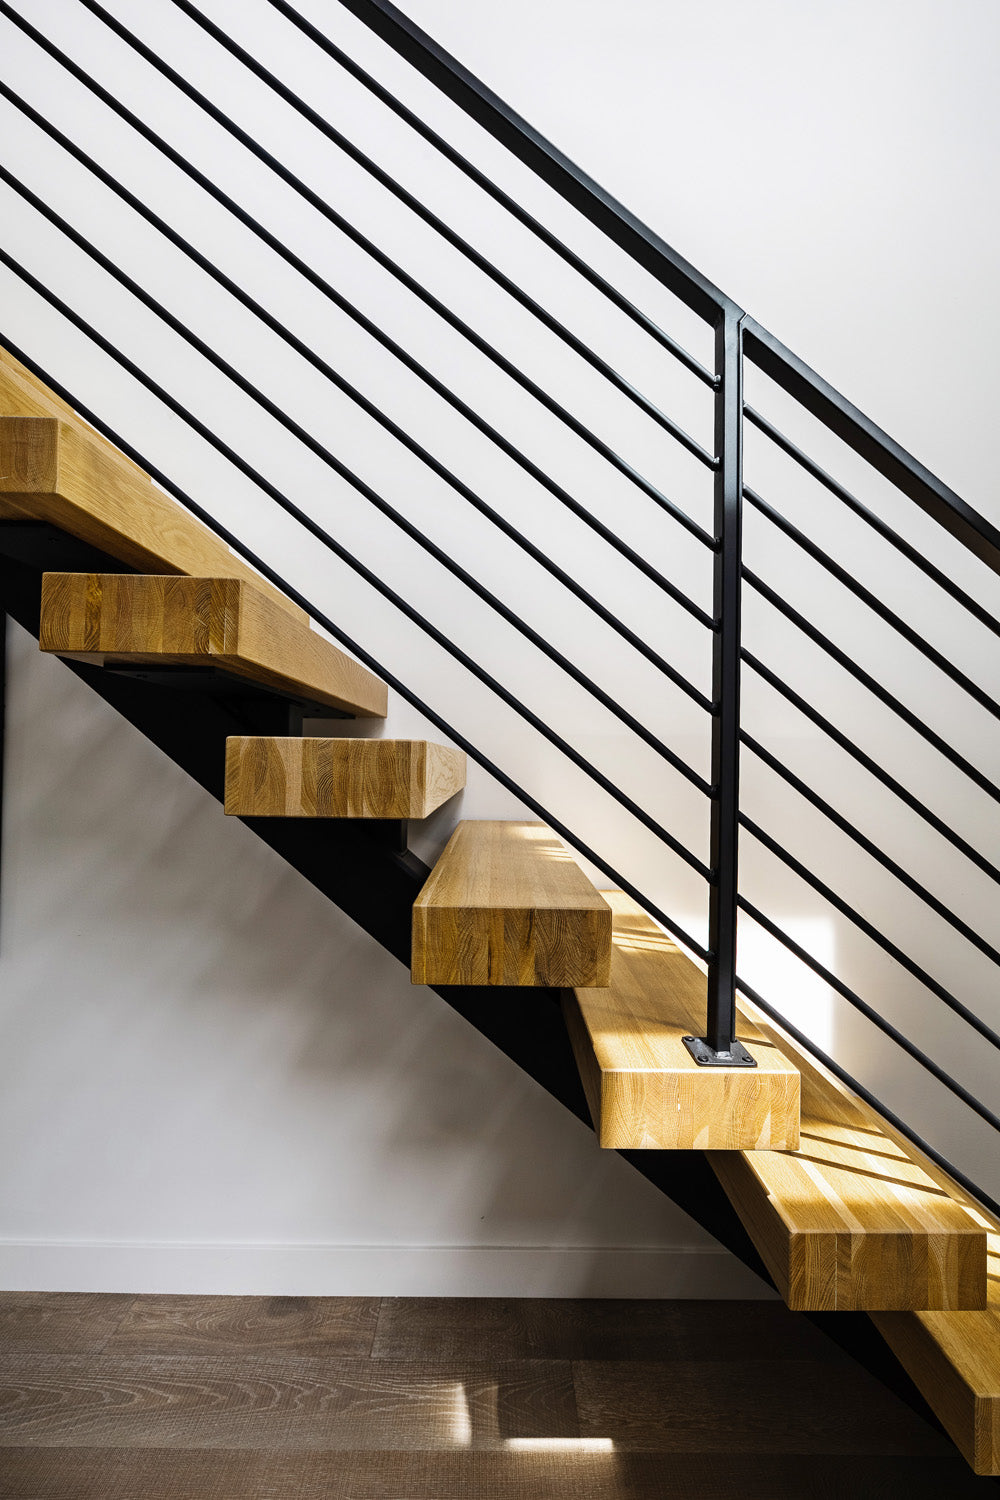 Wood stairs and metal railing by Edgework Creative